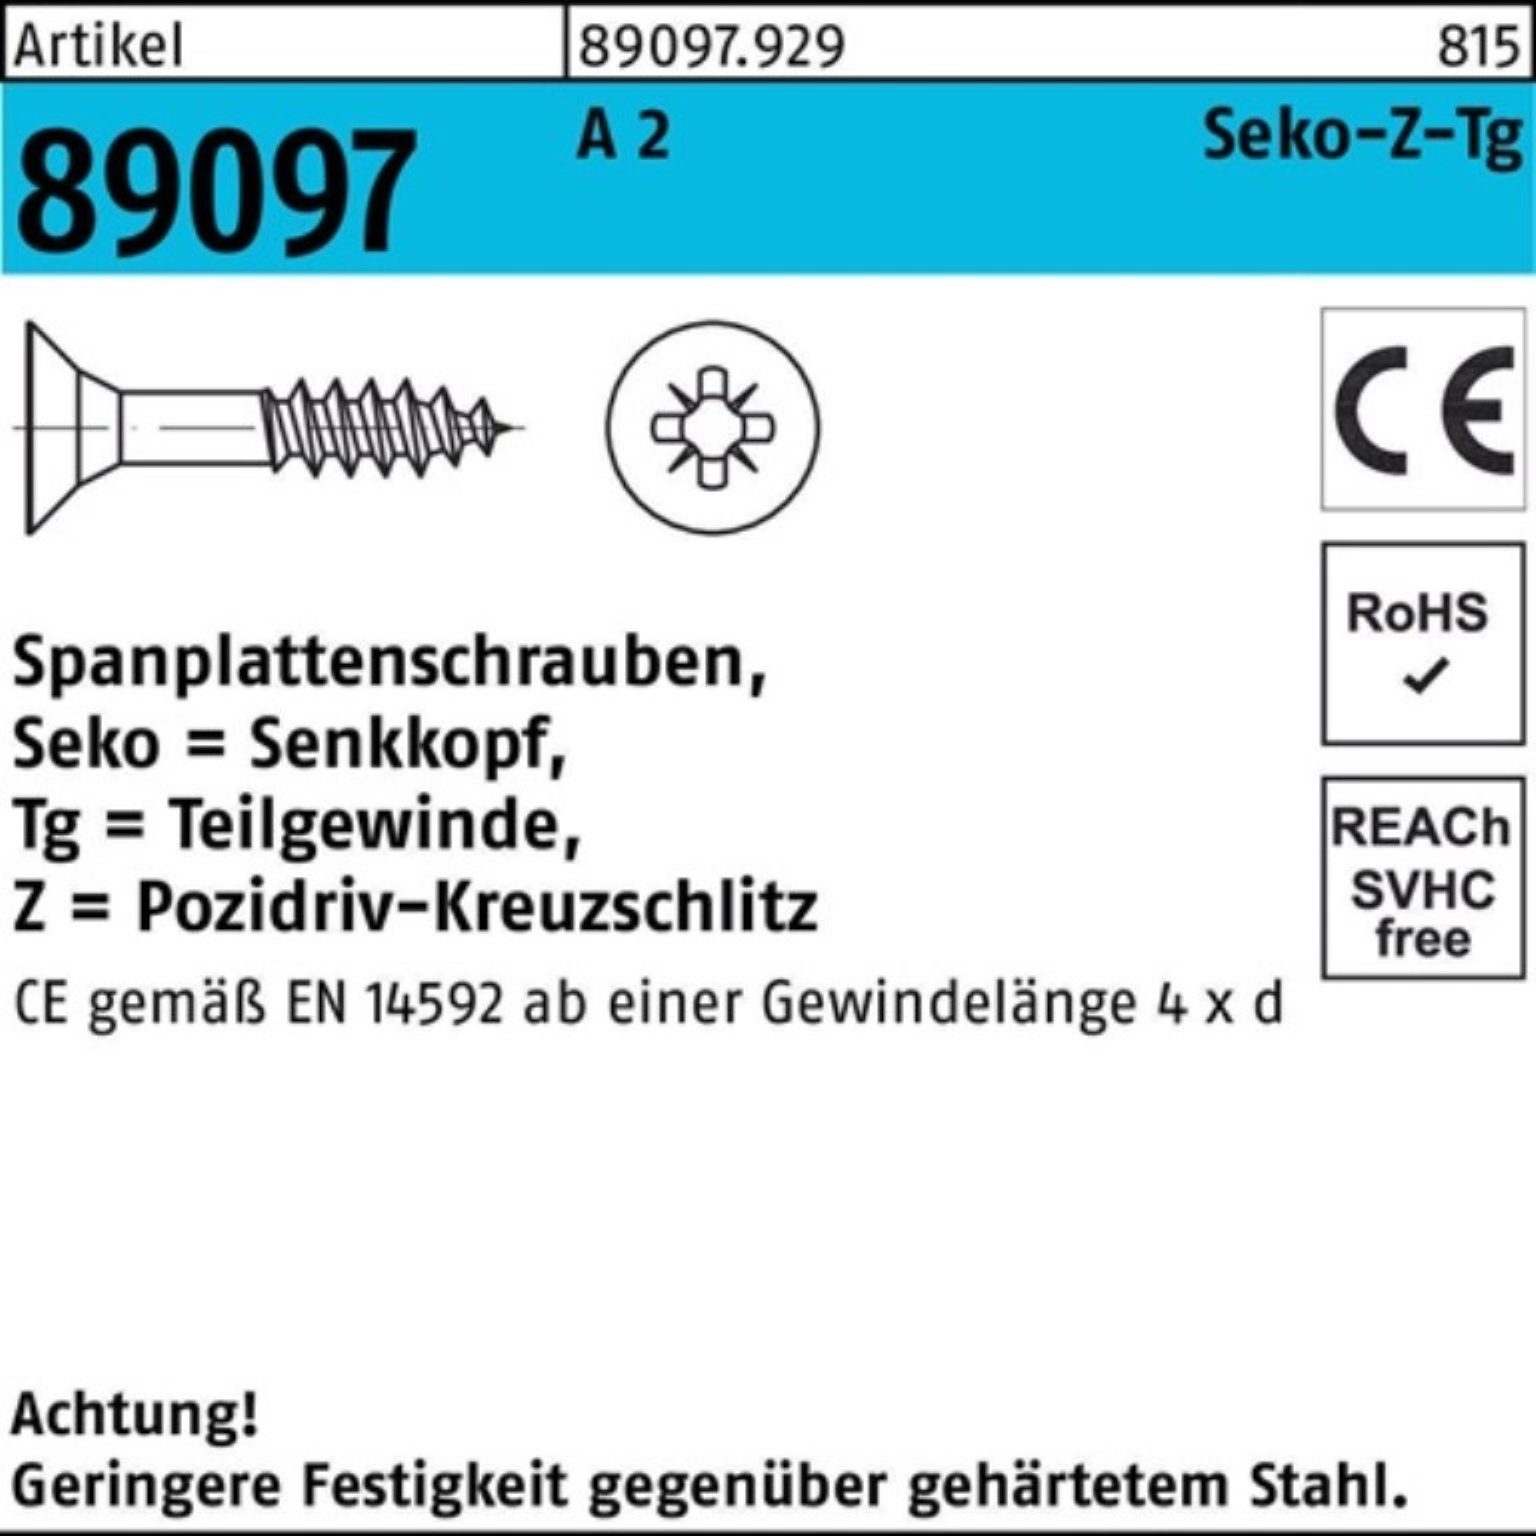 Reyher Spanplattenschraube 100er Pack Spanplattenschraube 5x SEKO TG 100 2 70-Z Stü PZ R A 89097